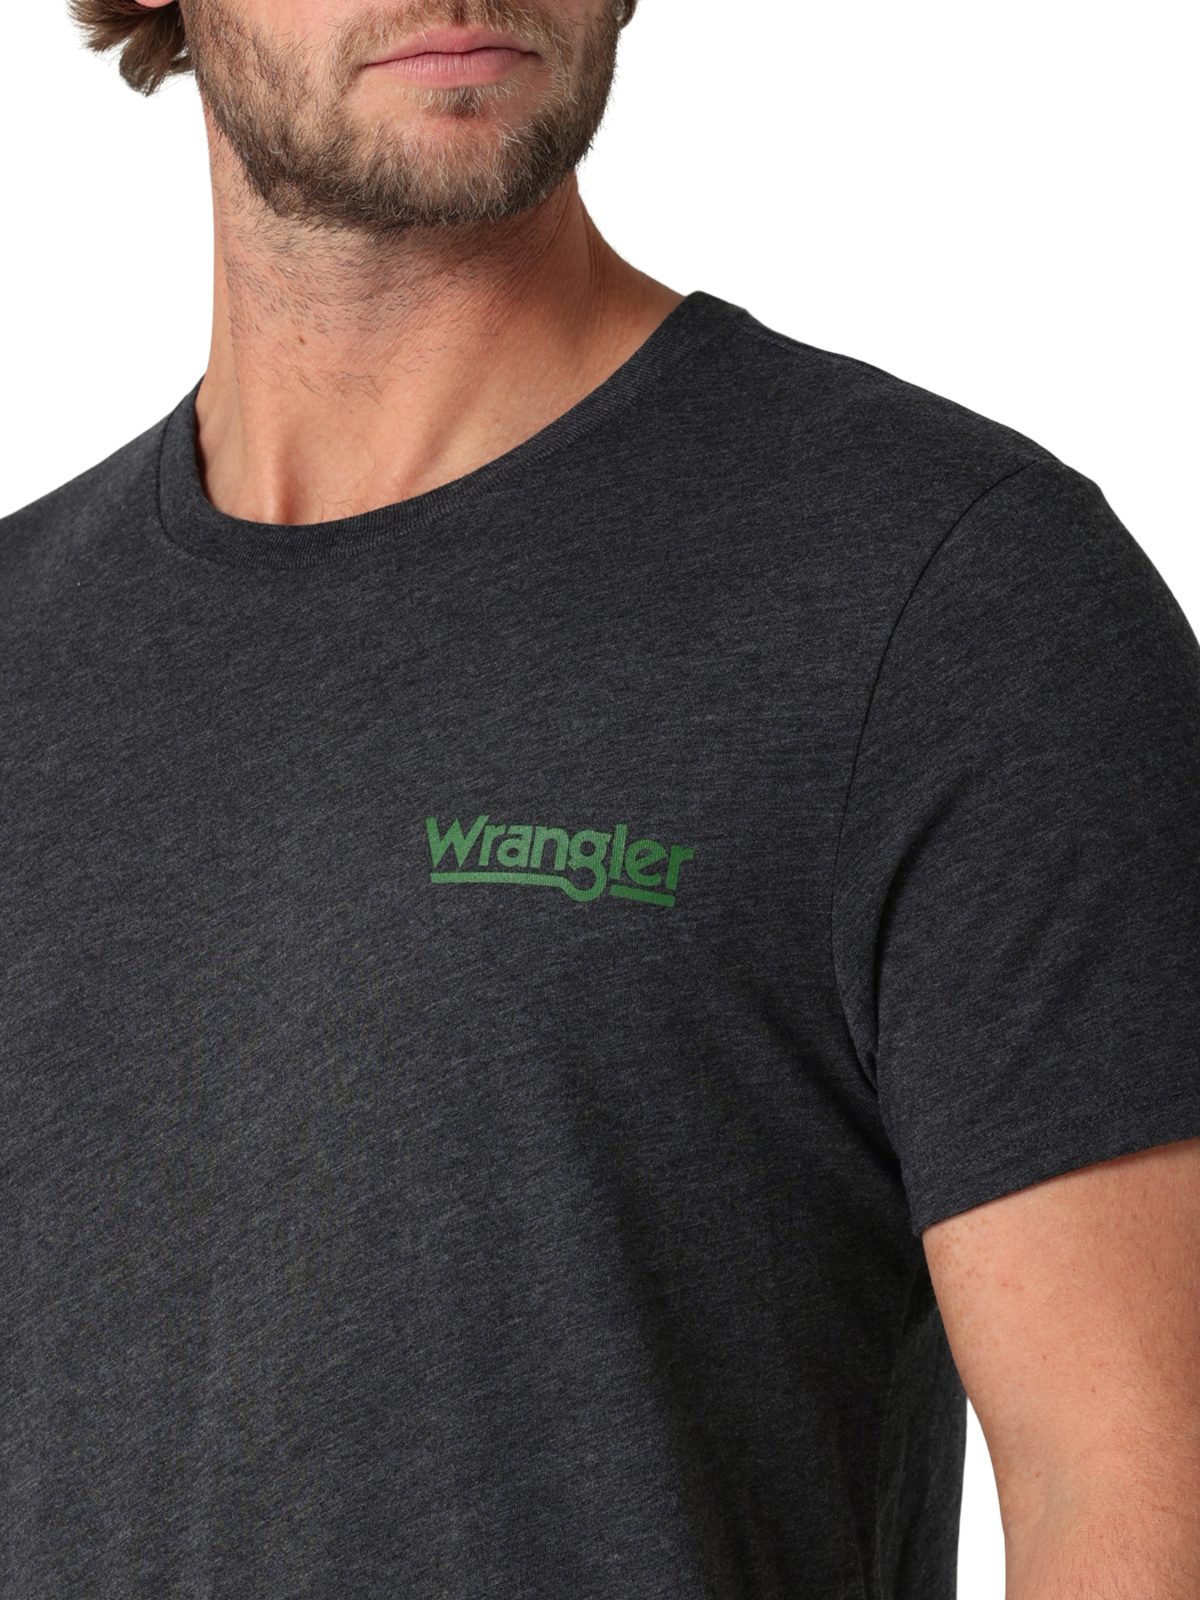 Camiseta en color carbón jaspeado con logo vaquero original de Wrangler